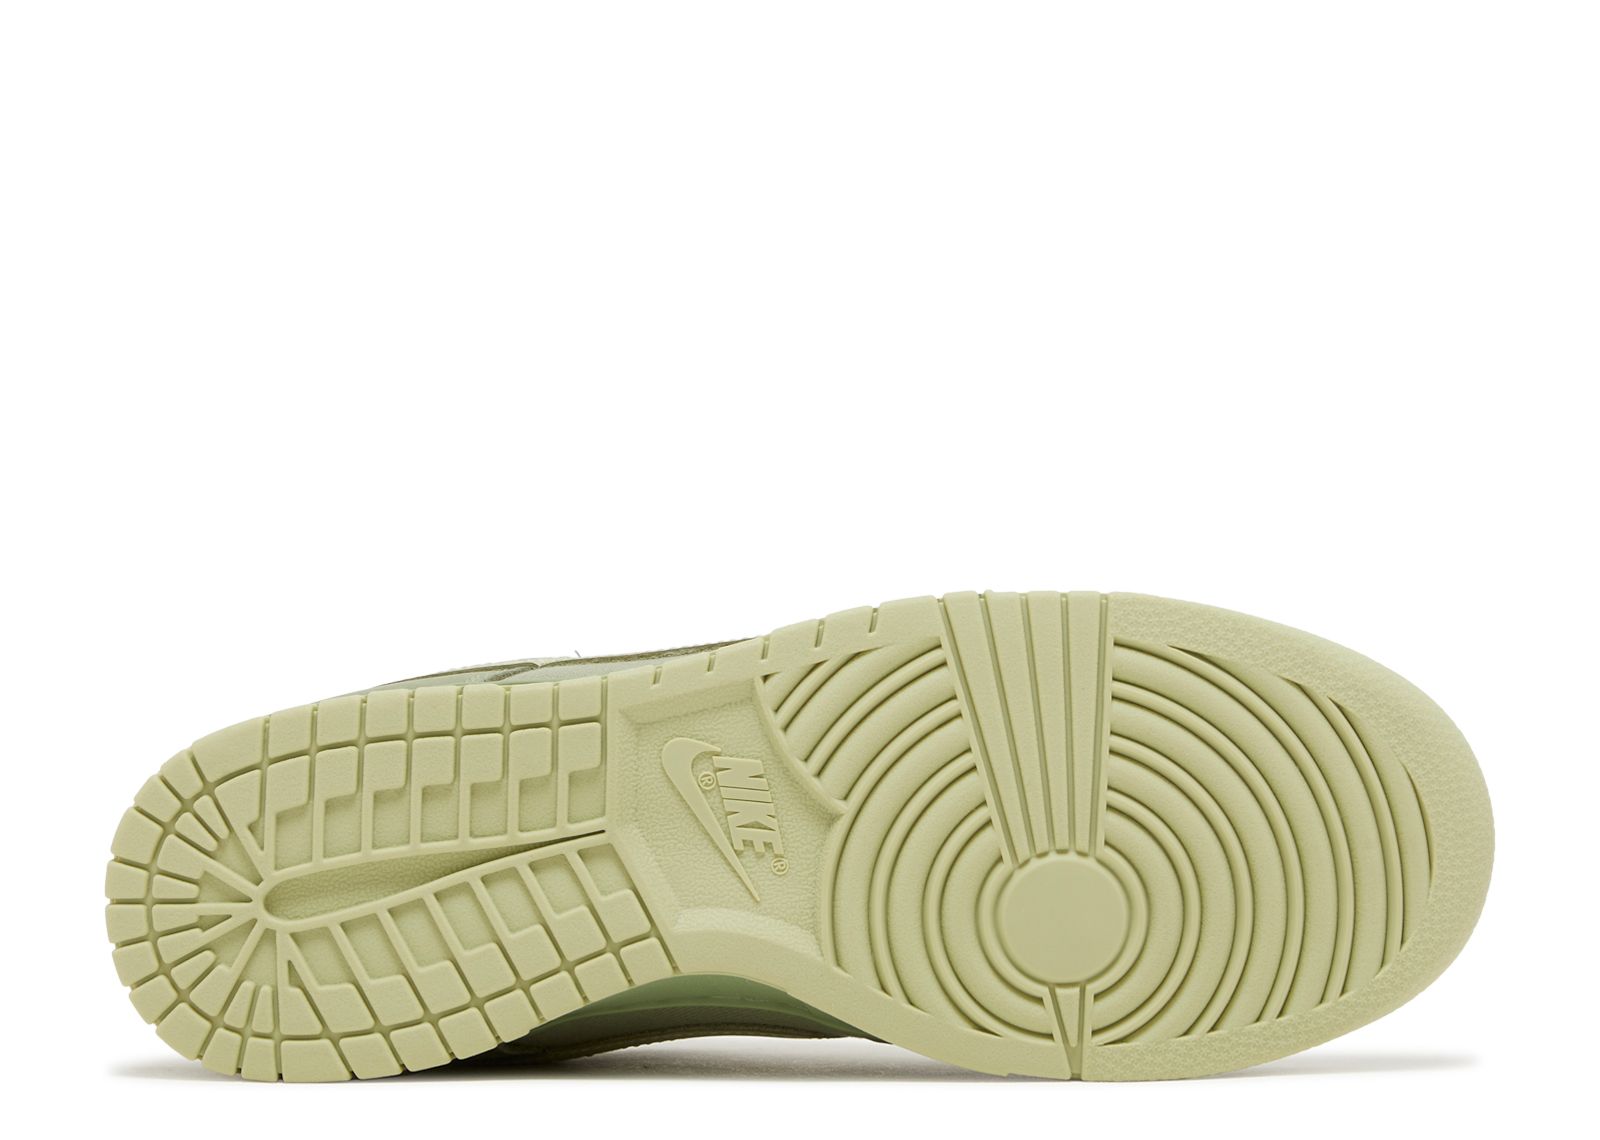 Dunk Low Premium 'Oil Green' - Nike - FB8895 300 - oil green/olive